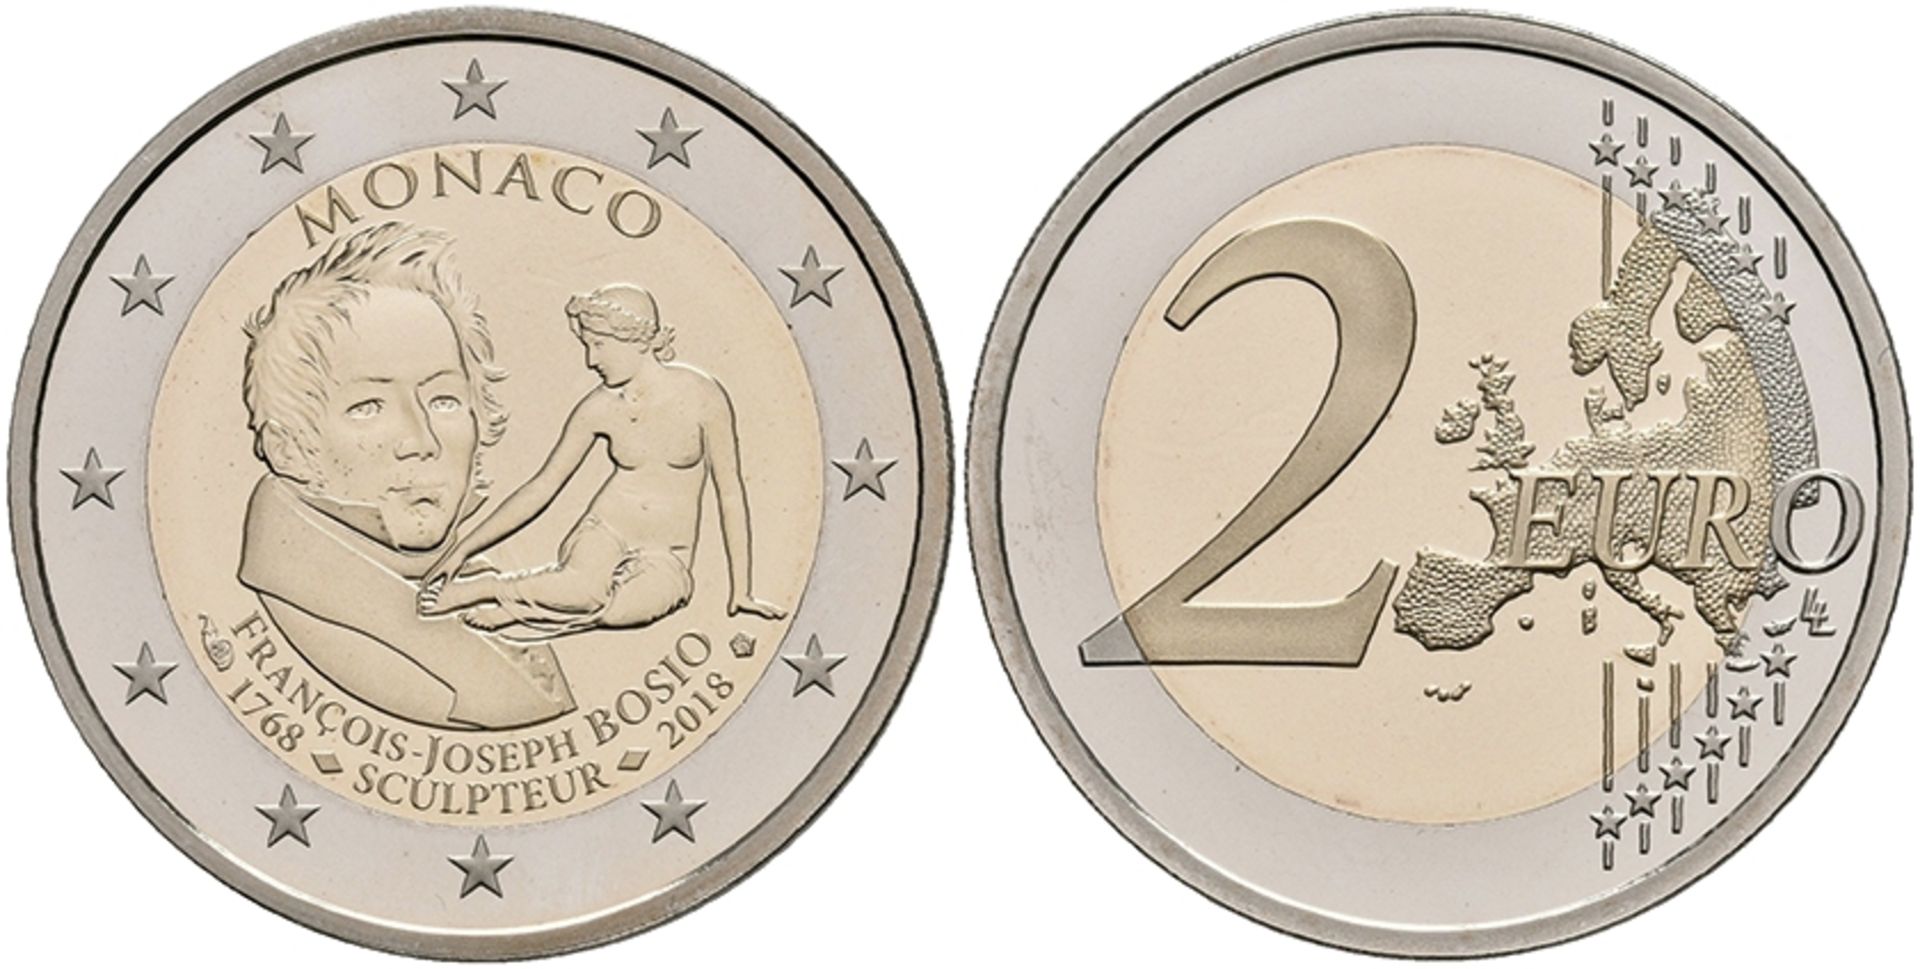 2 Euro, 2018, Francois-Joseph Bosio, mit Zertifikat in Ausgabeschatulle, PP.